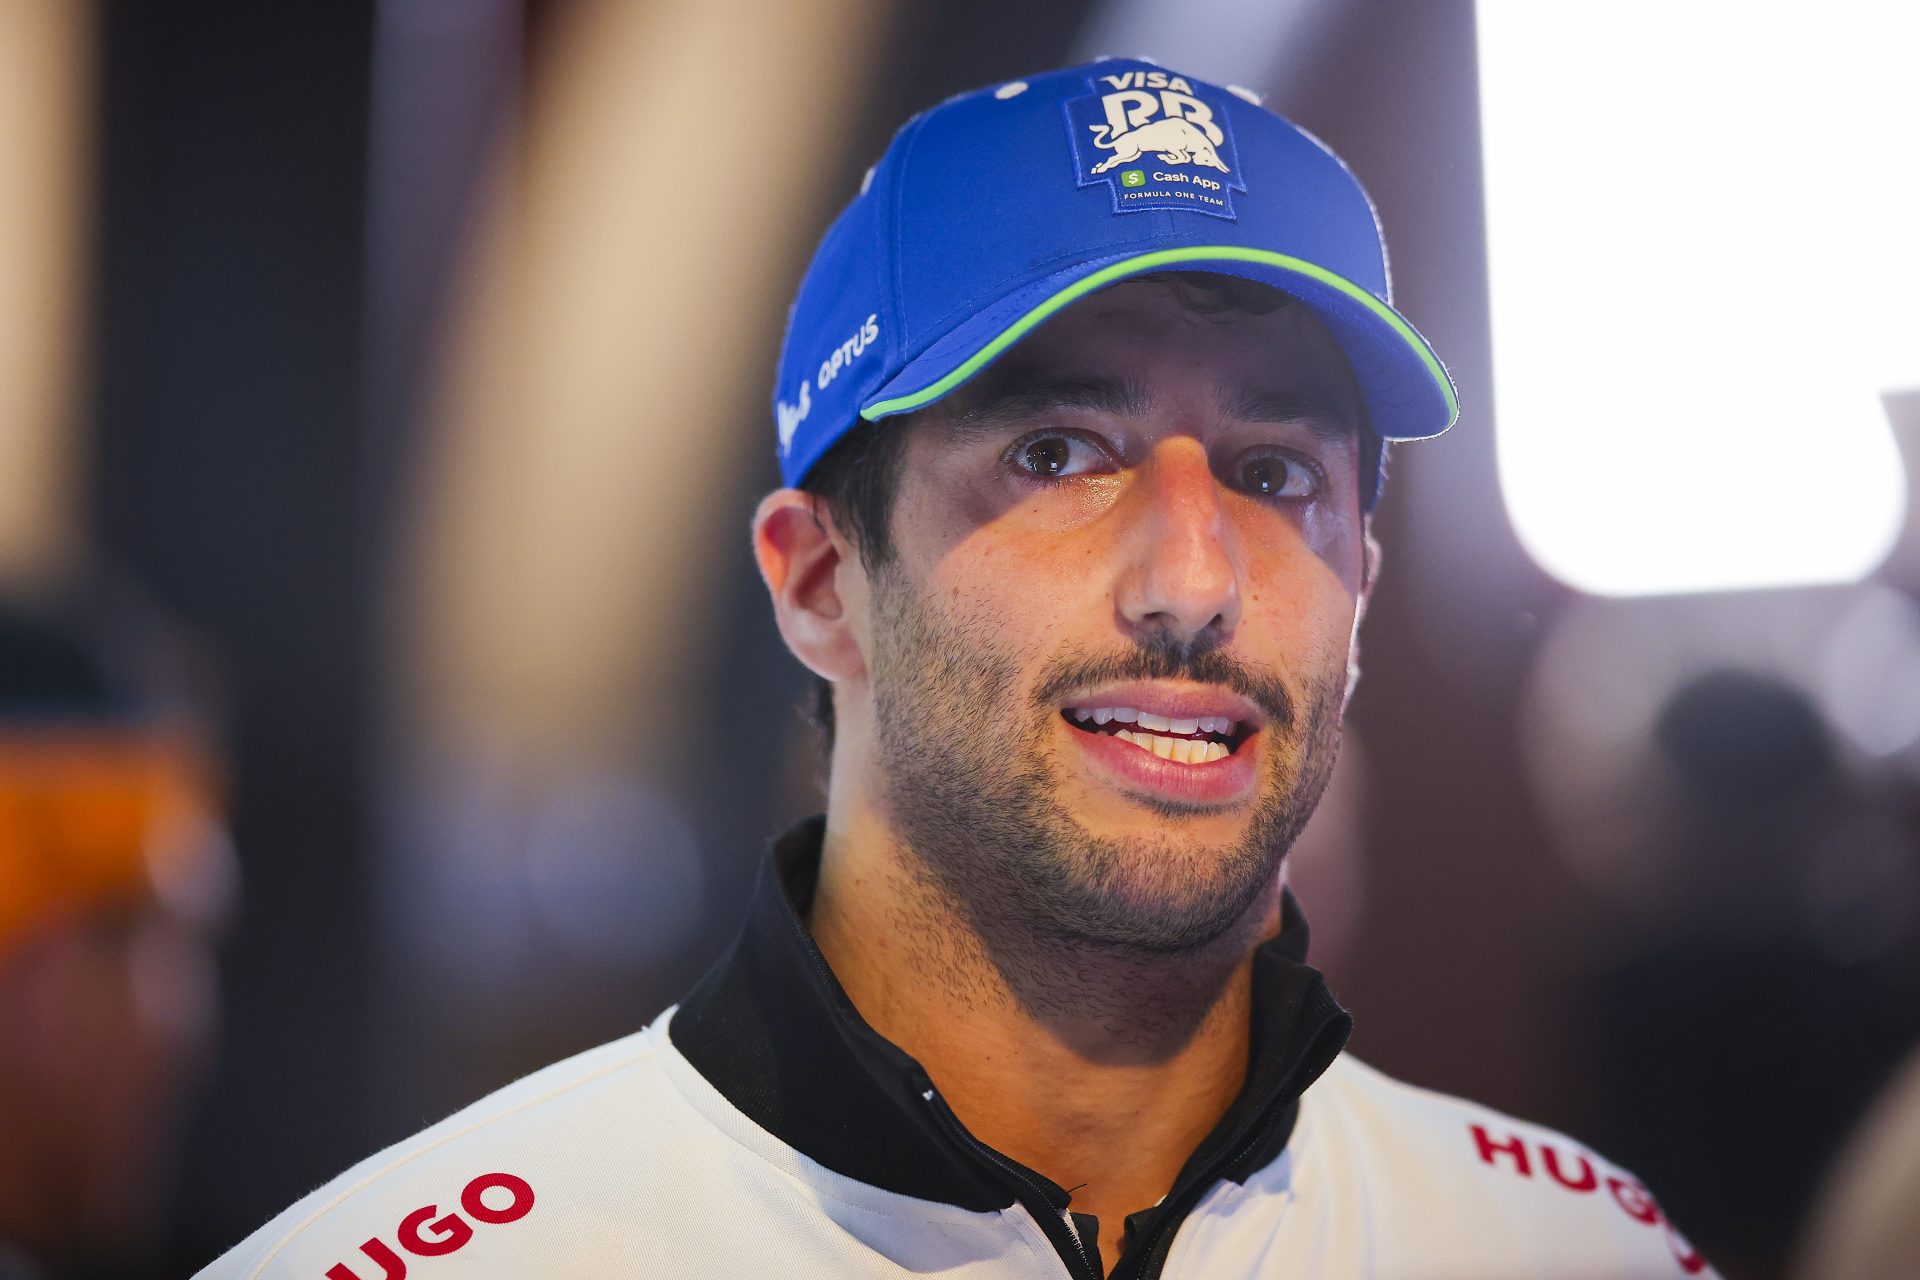 D. Ricciardo (Visa Cash App RB), N. Hülkenberg (Haas), L. Stroll (Aston Martin), G. Zhou (Stake): $2M